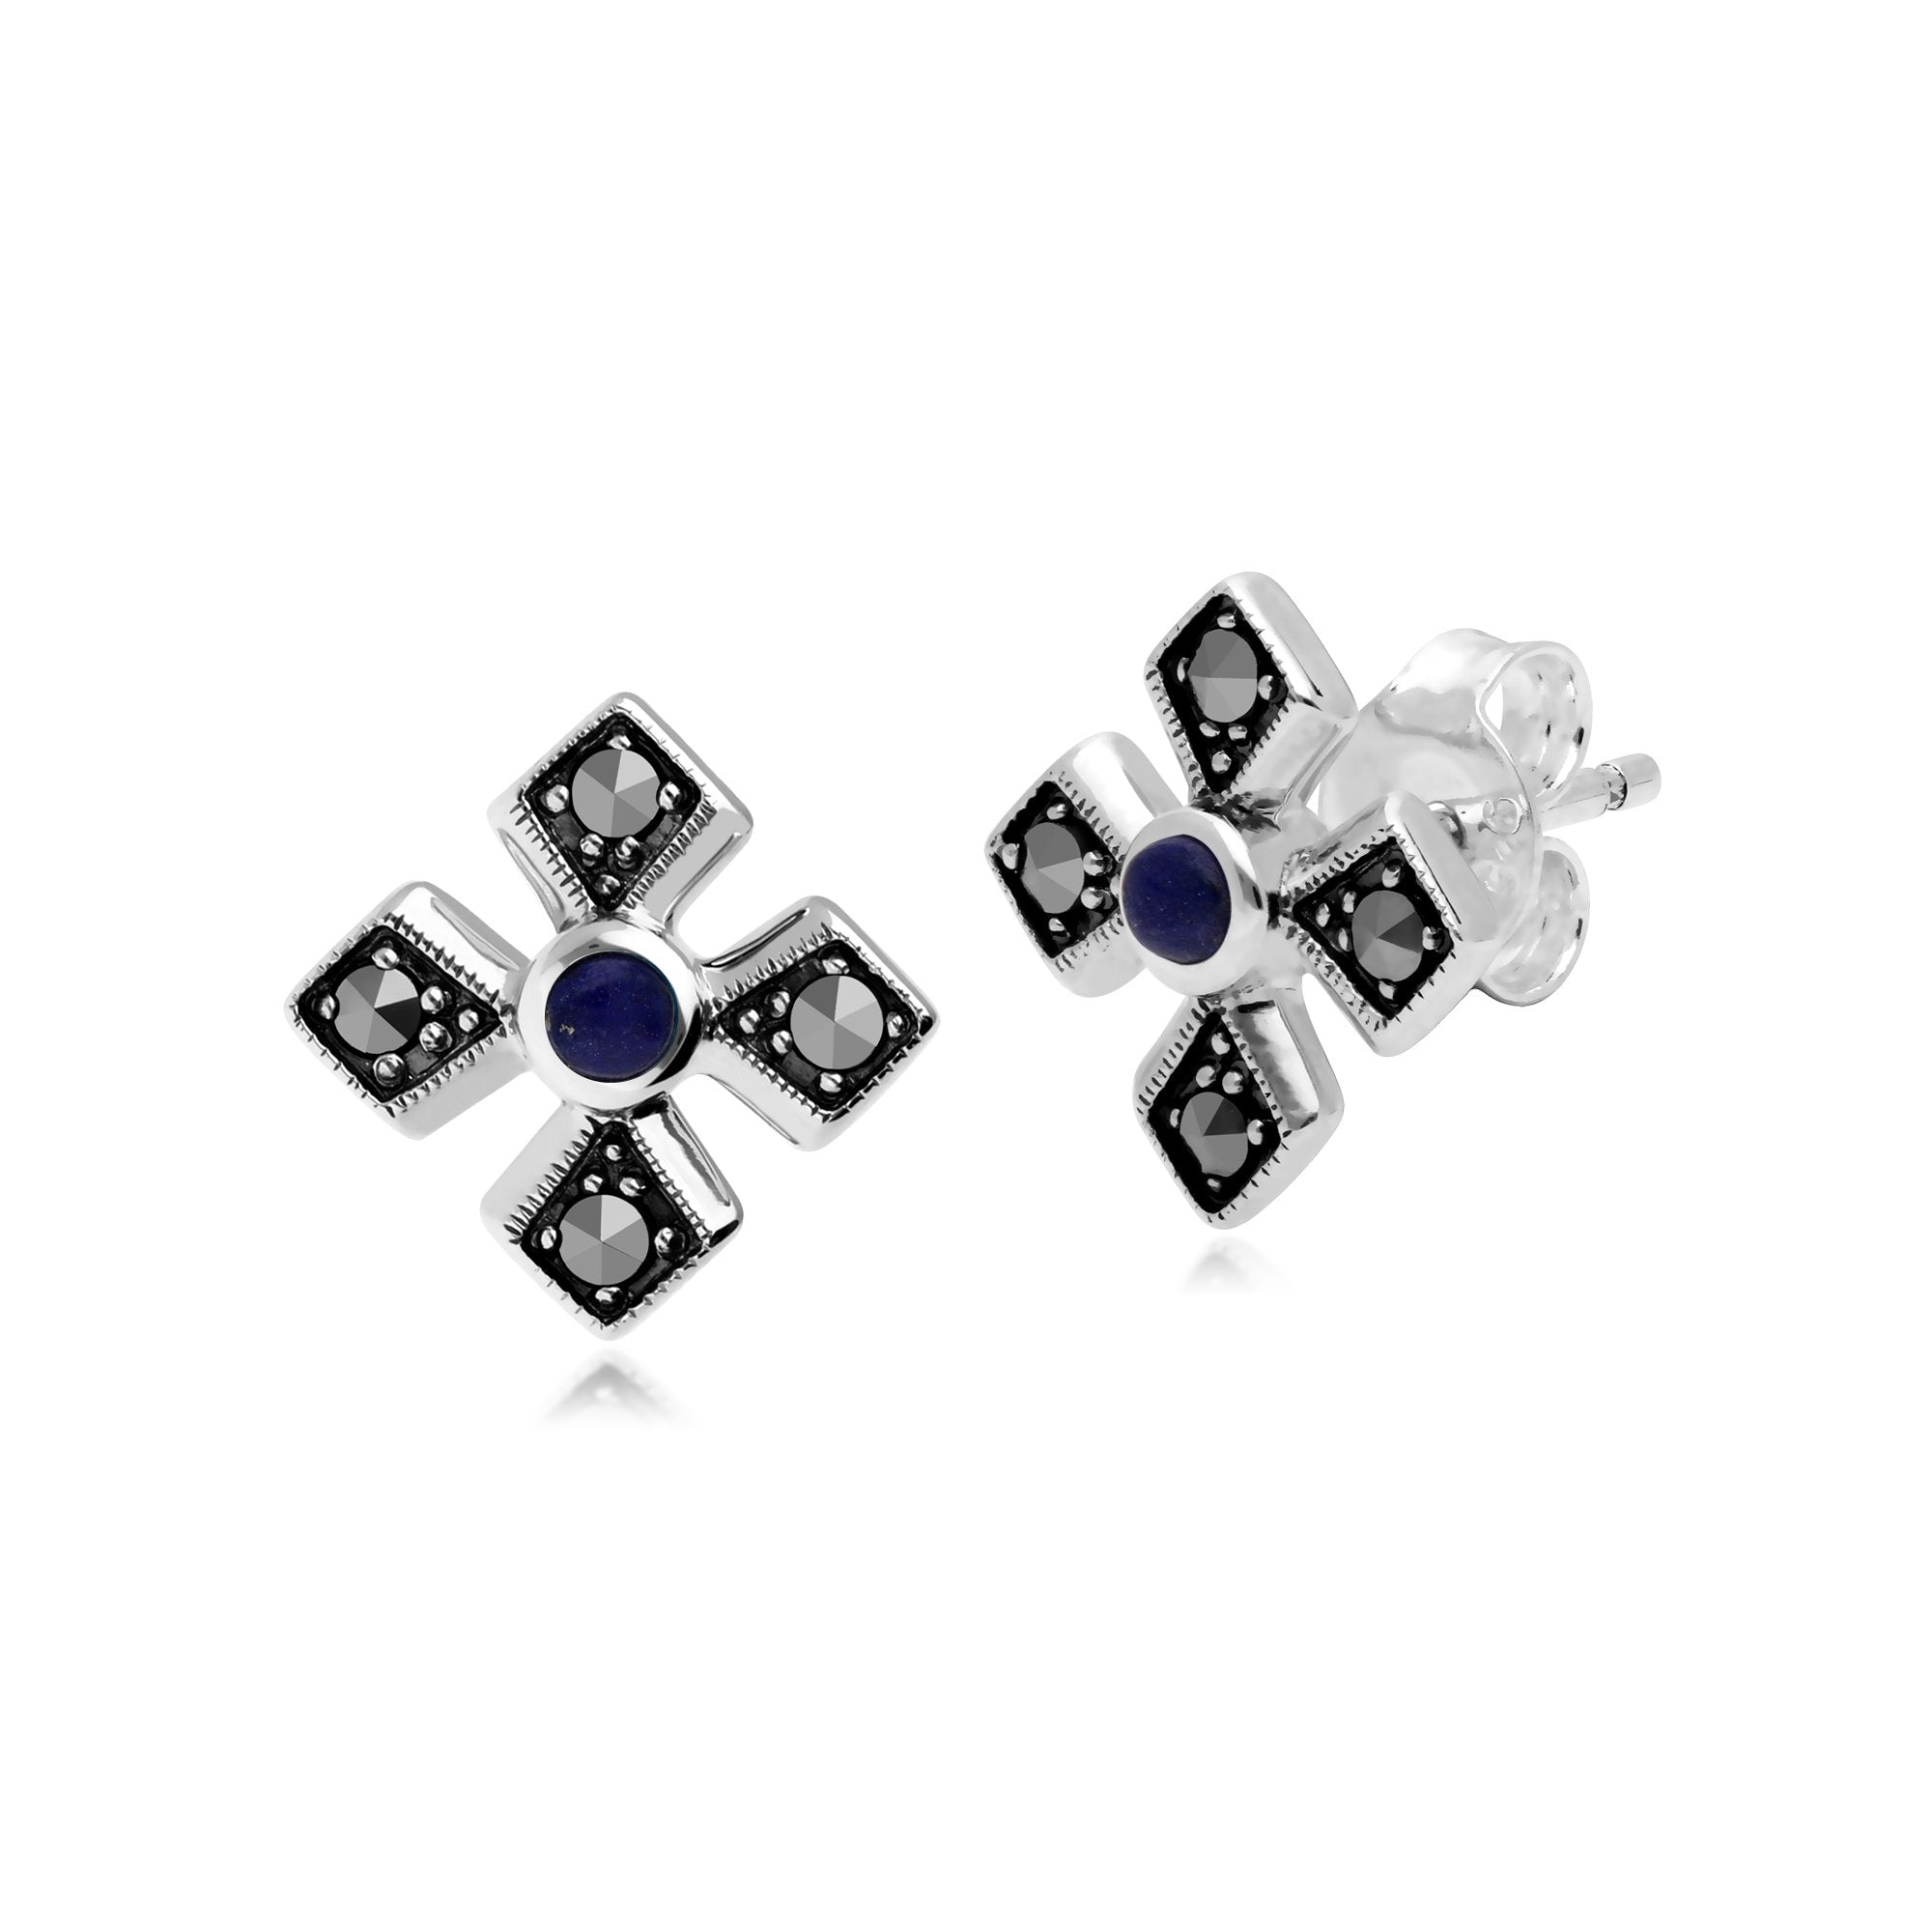 Gemondo Sterling Silver Marcasite & Lapis Lazuli Earring